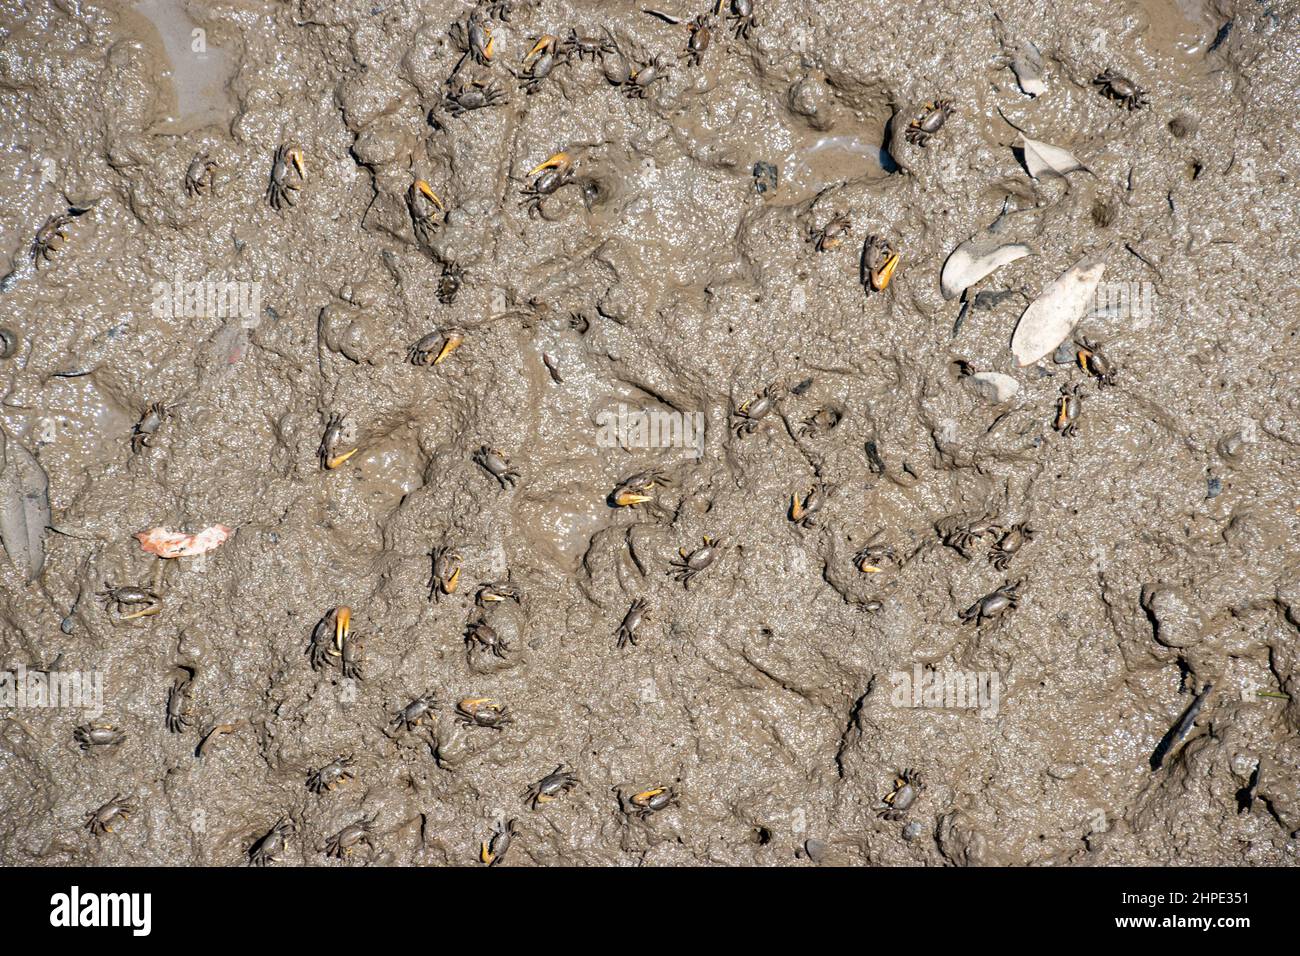 Charleston, South Carolina pluffmud with small crabs Stock Photo